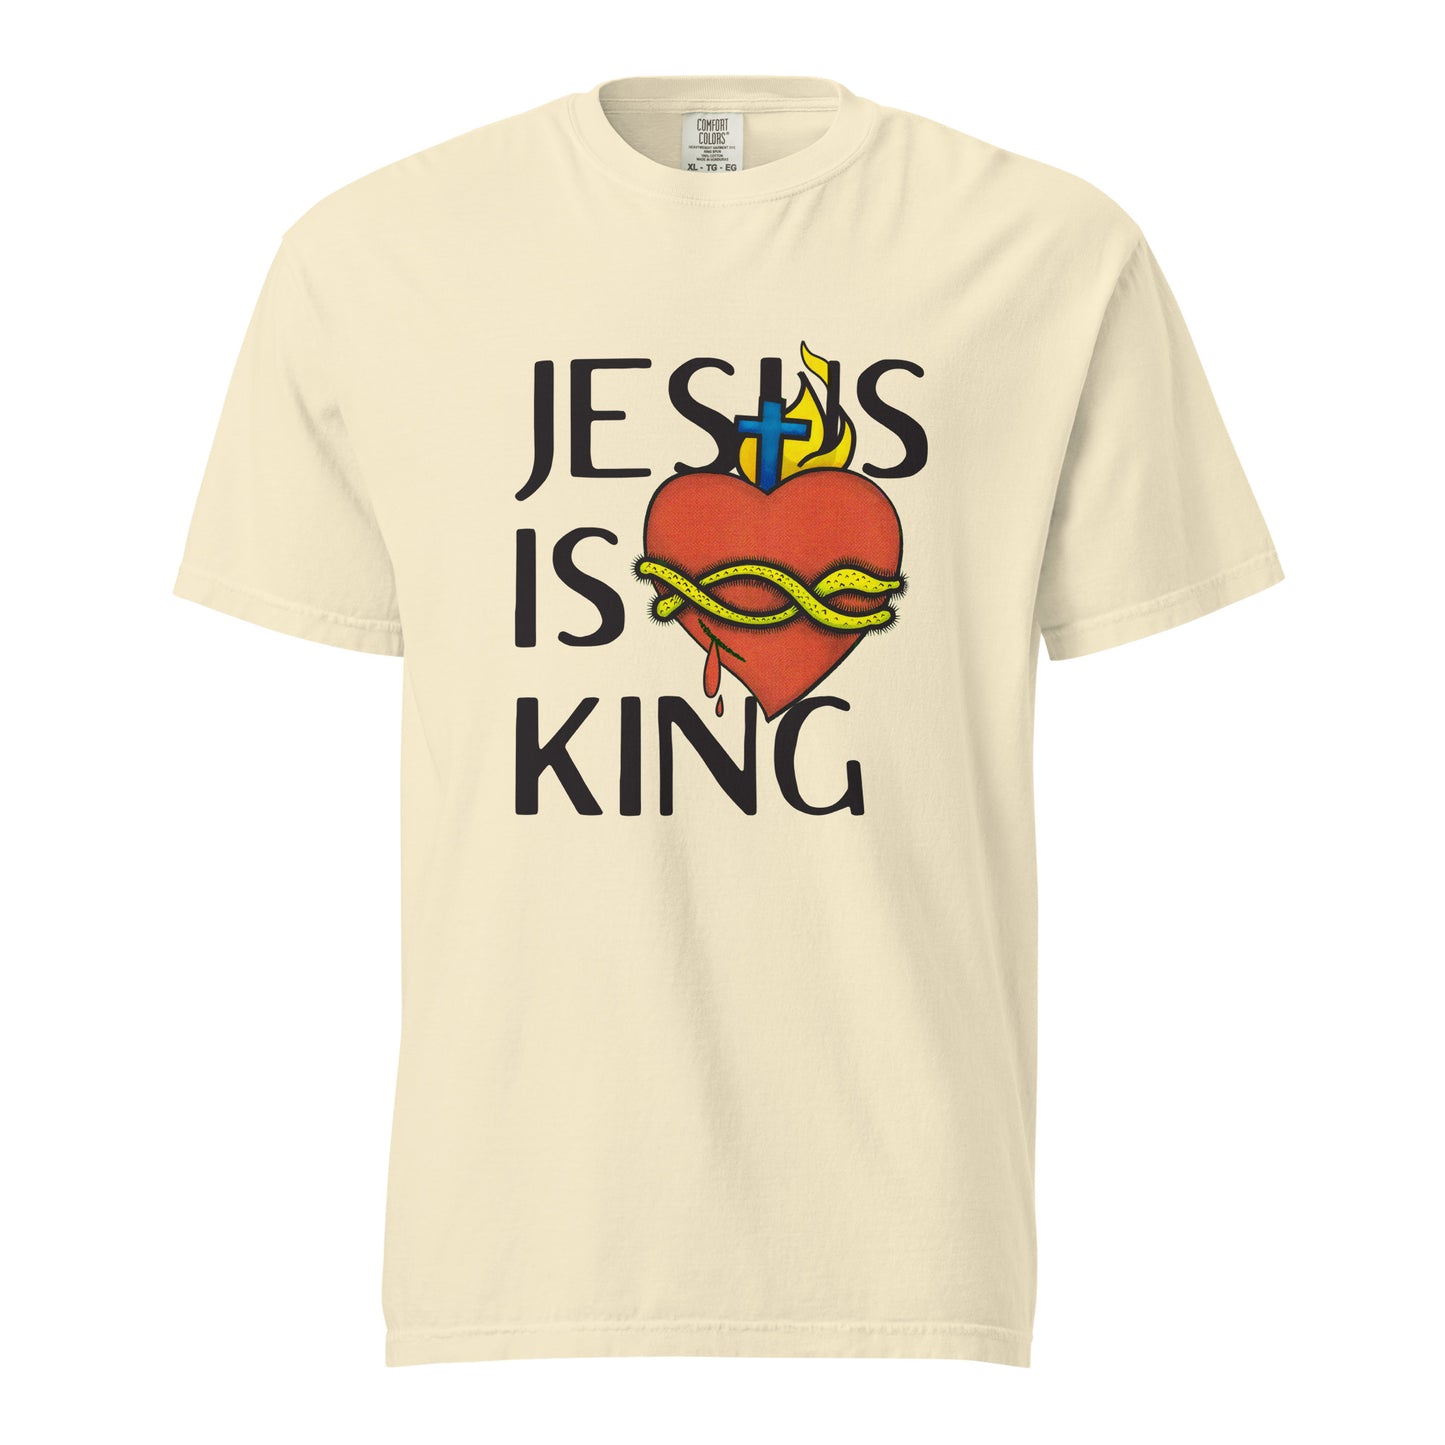 Jesus is King - Unisex garment-dyed heavyweight t-shirt